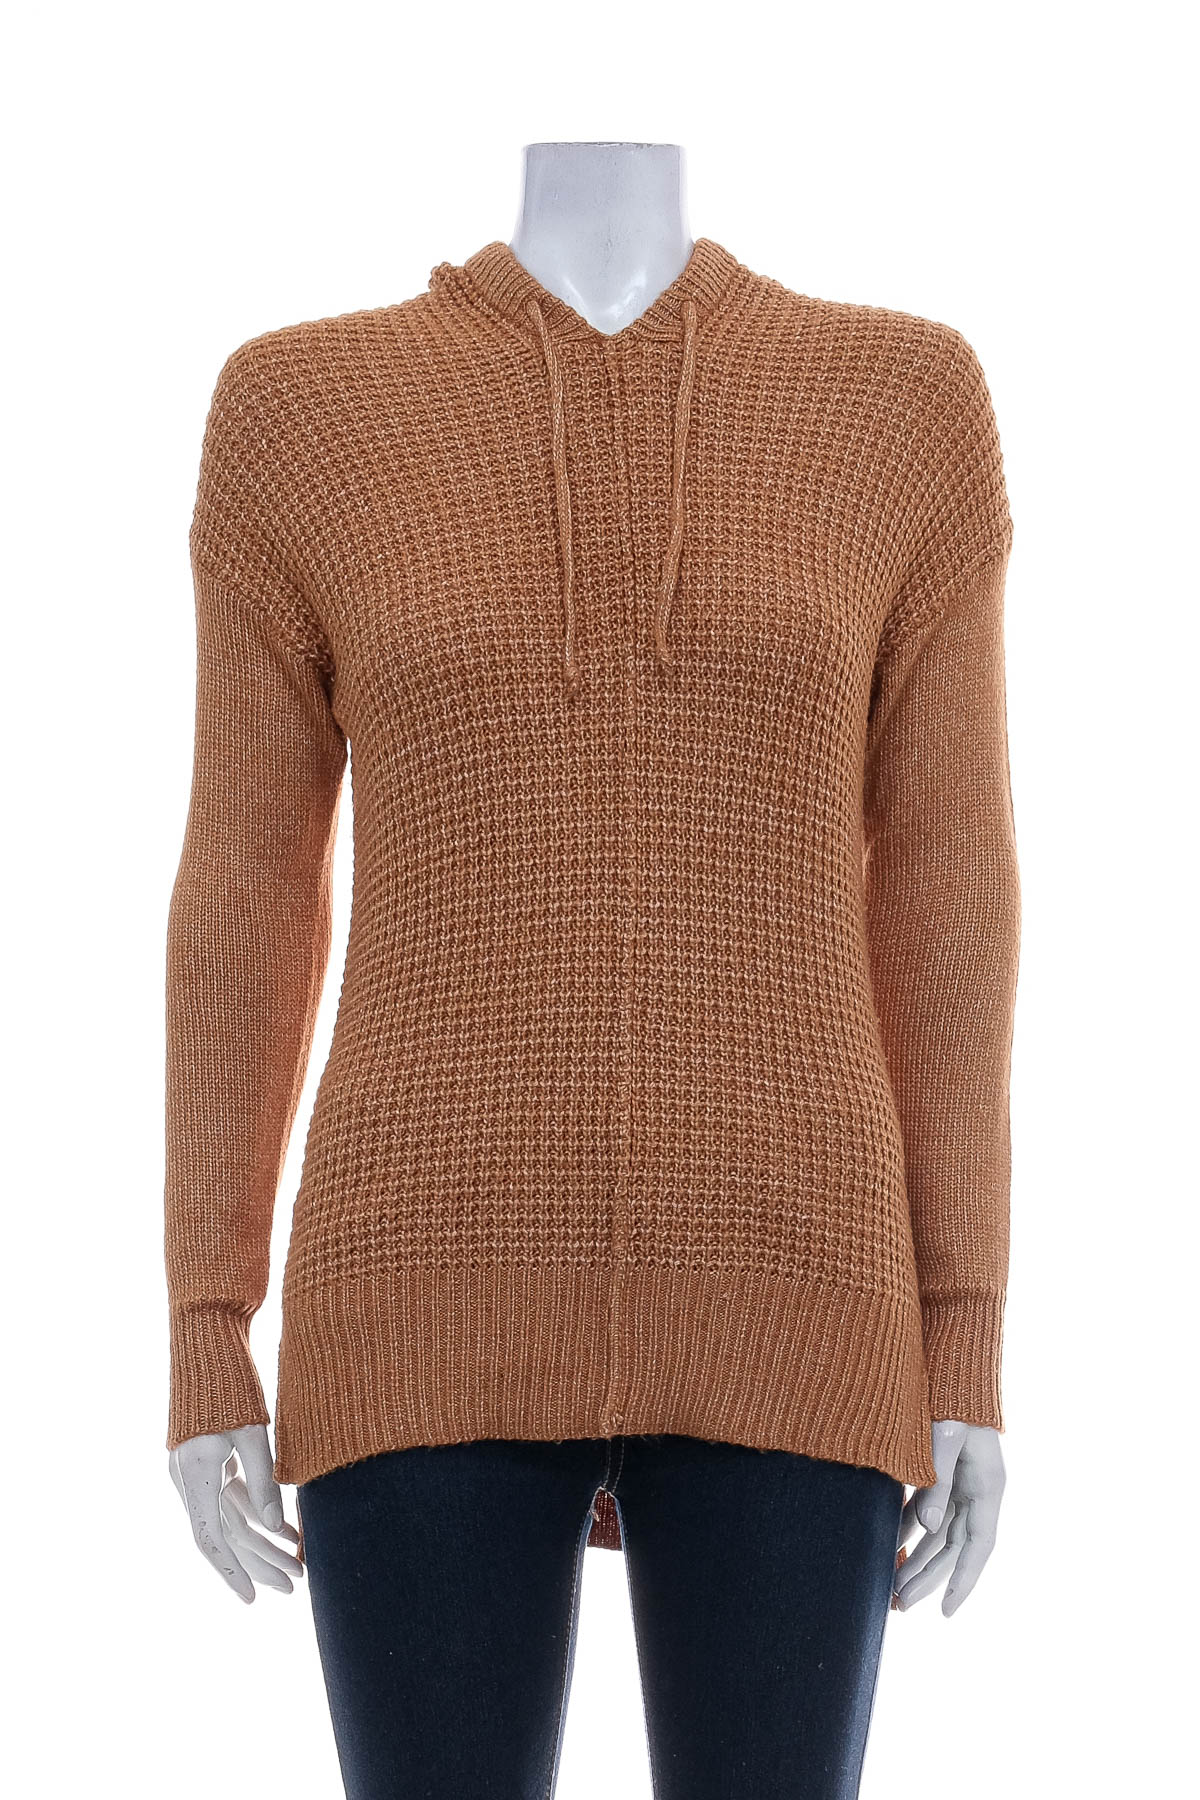 Women's sweater - Cynthia Rowley - 0